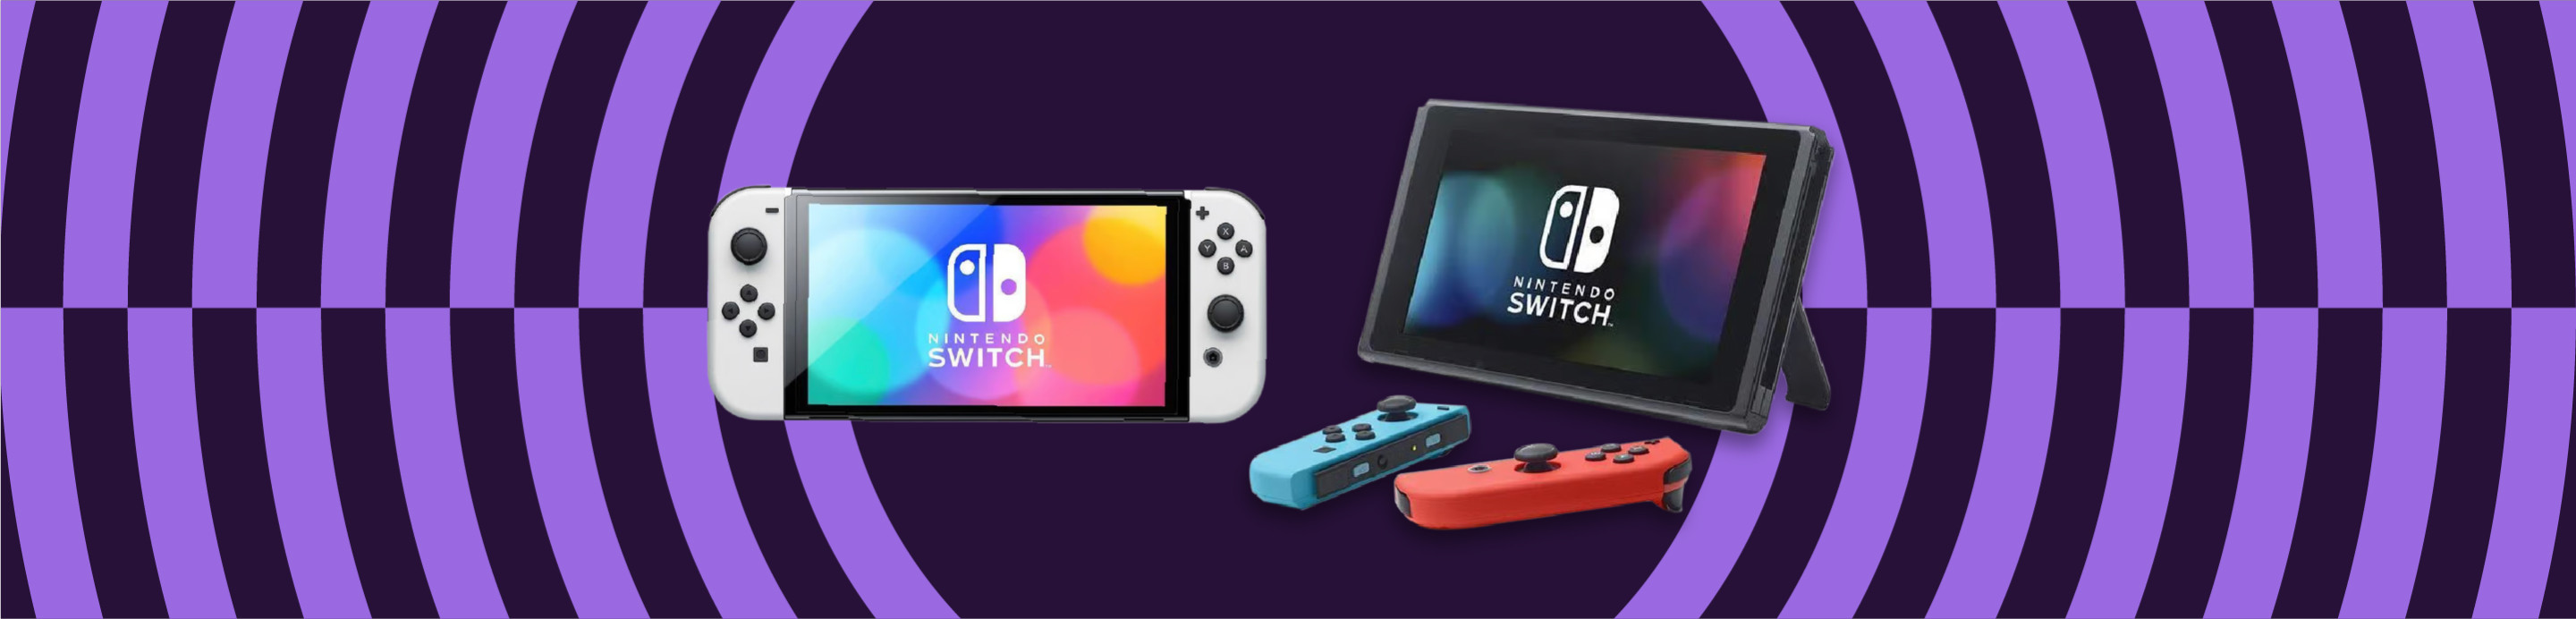 Nintendo-switch-vs-switch-oled